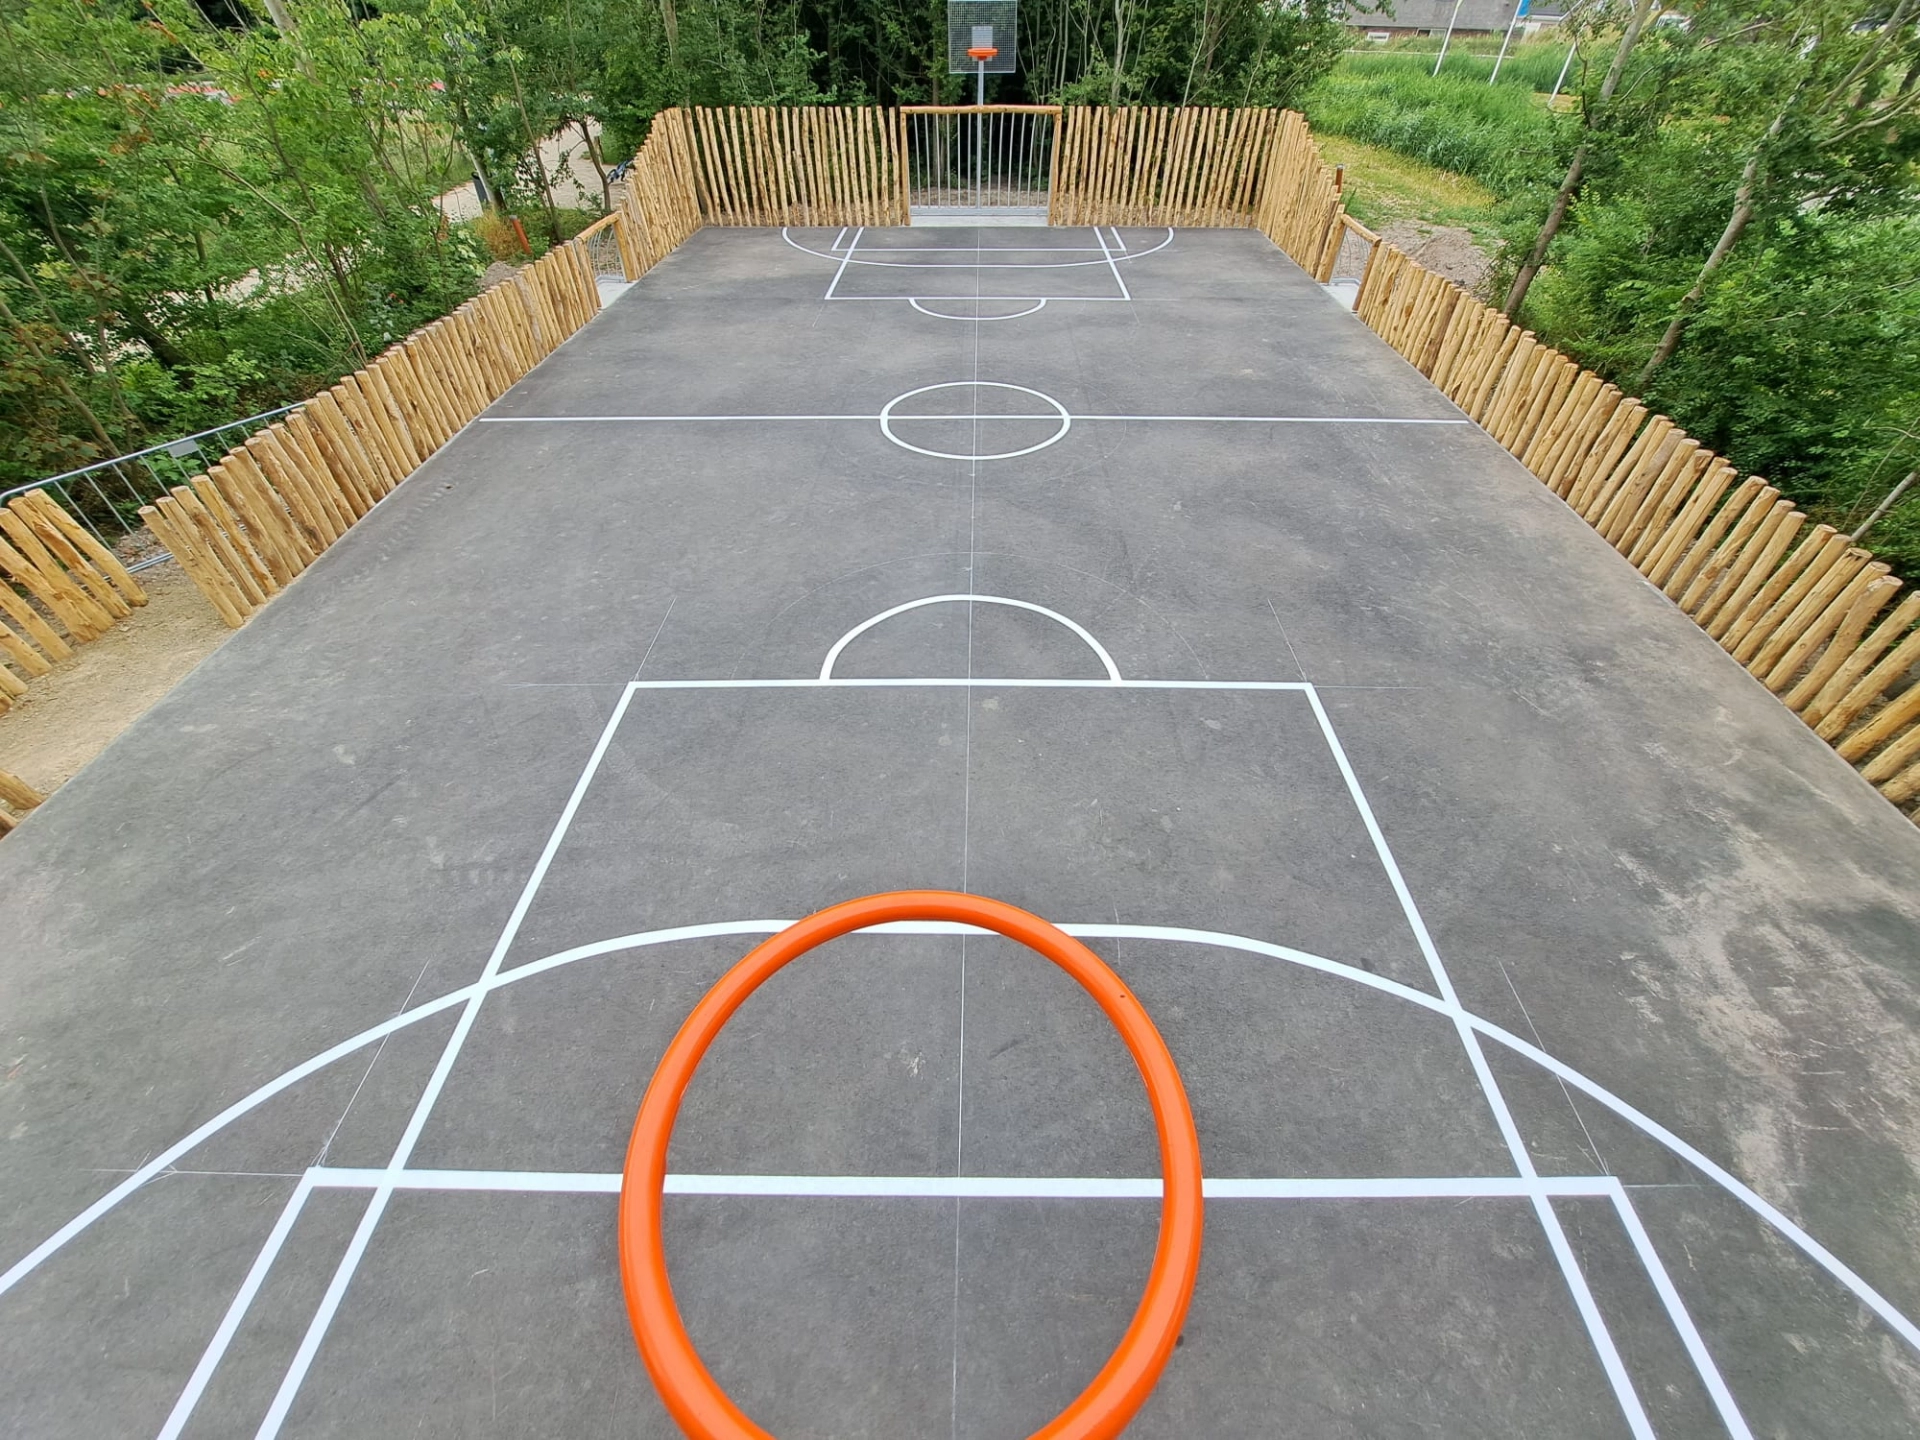 Schoolplein spel markering - basketveld-voetbalveld-belijning-wegmarkering